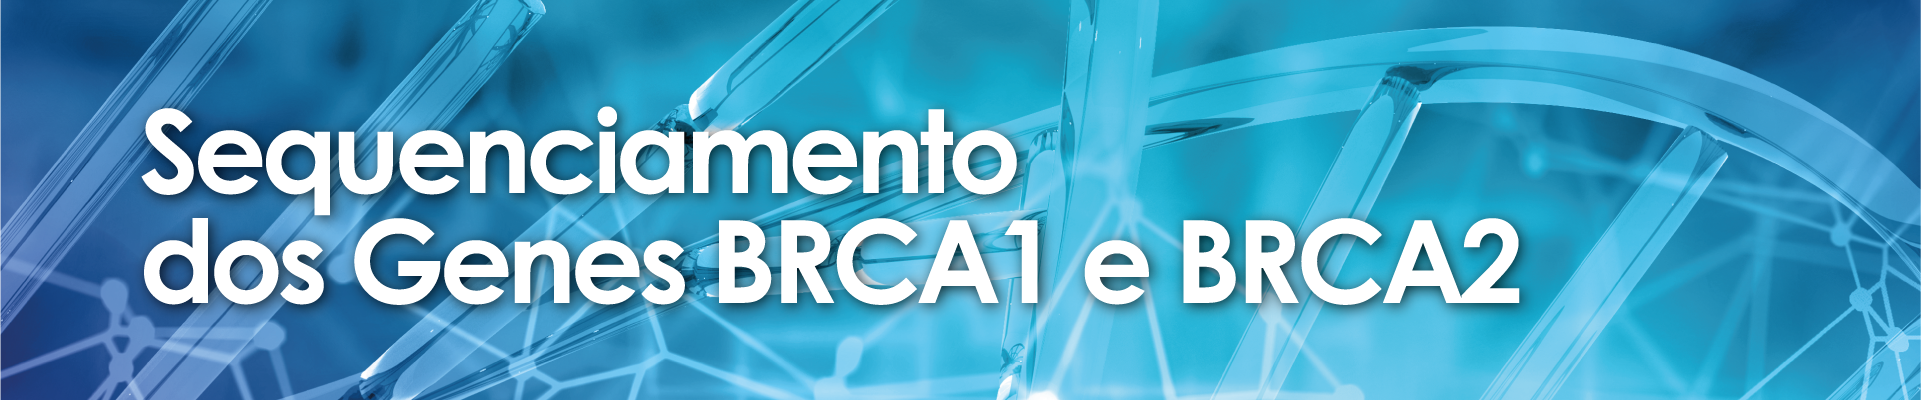 Sequenciamento dos Genes BRCA1 E BRCA2 - Exame Genético